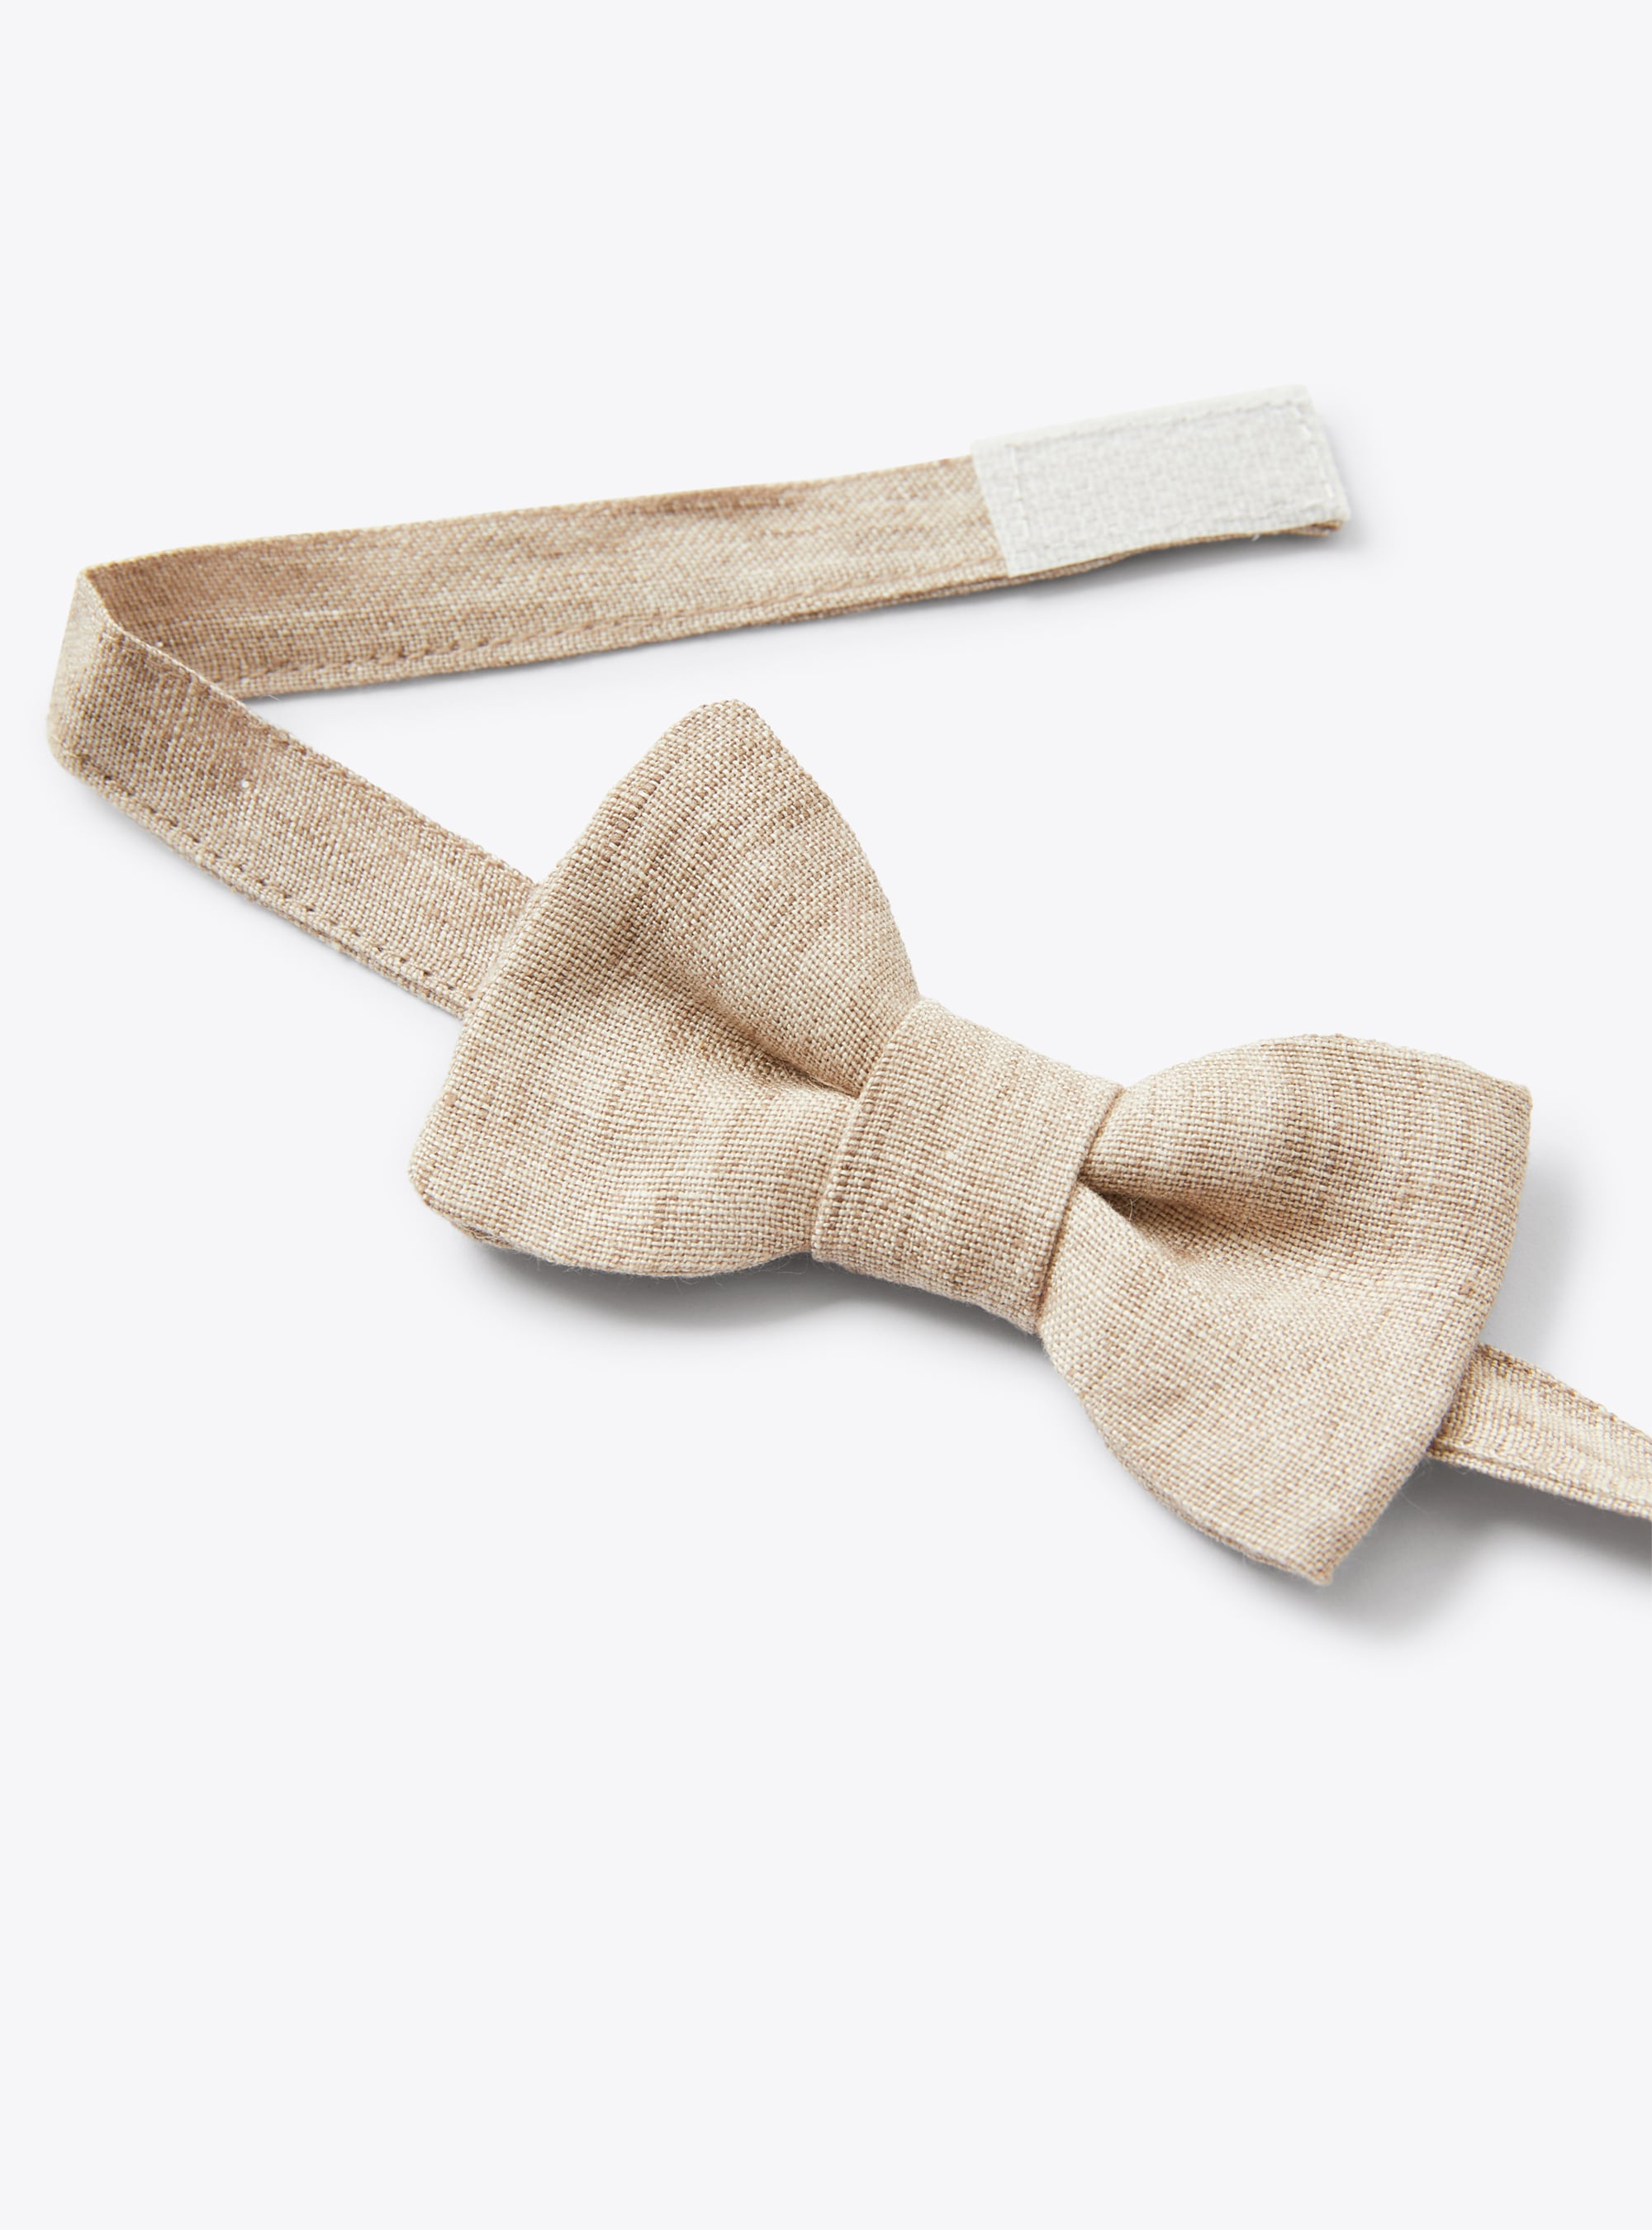 Bow tie in beige-mélange linen - Brown | Il Gufo